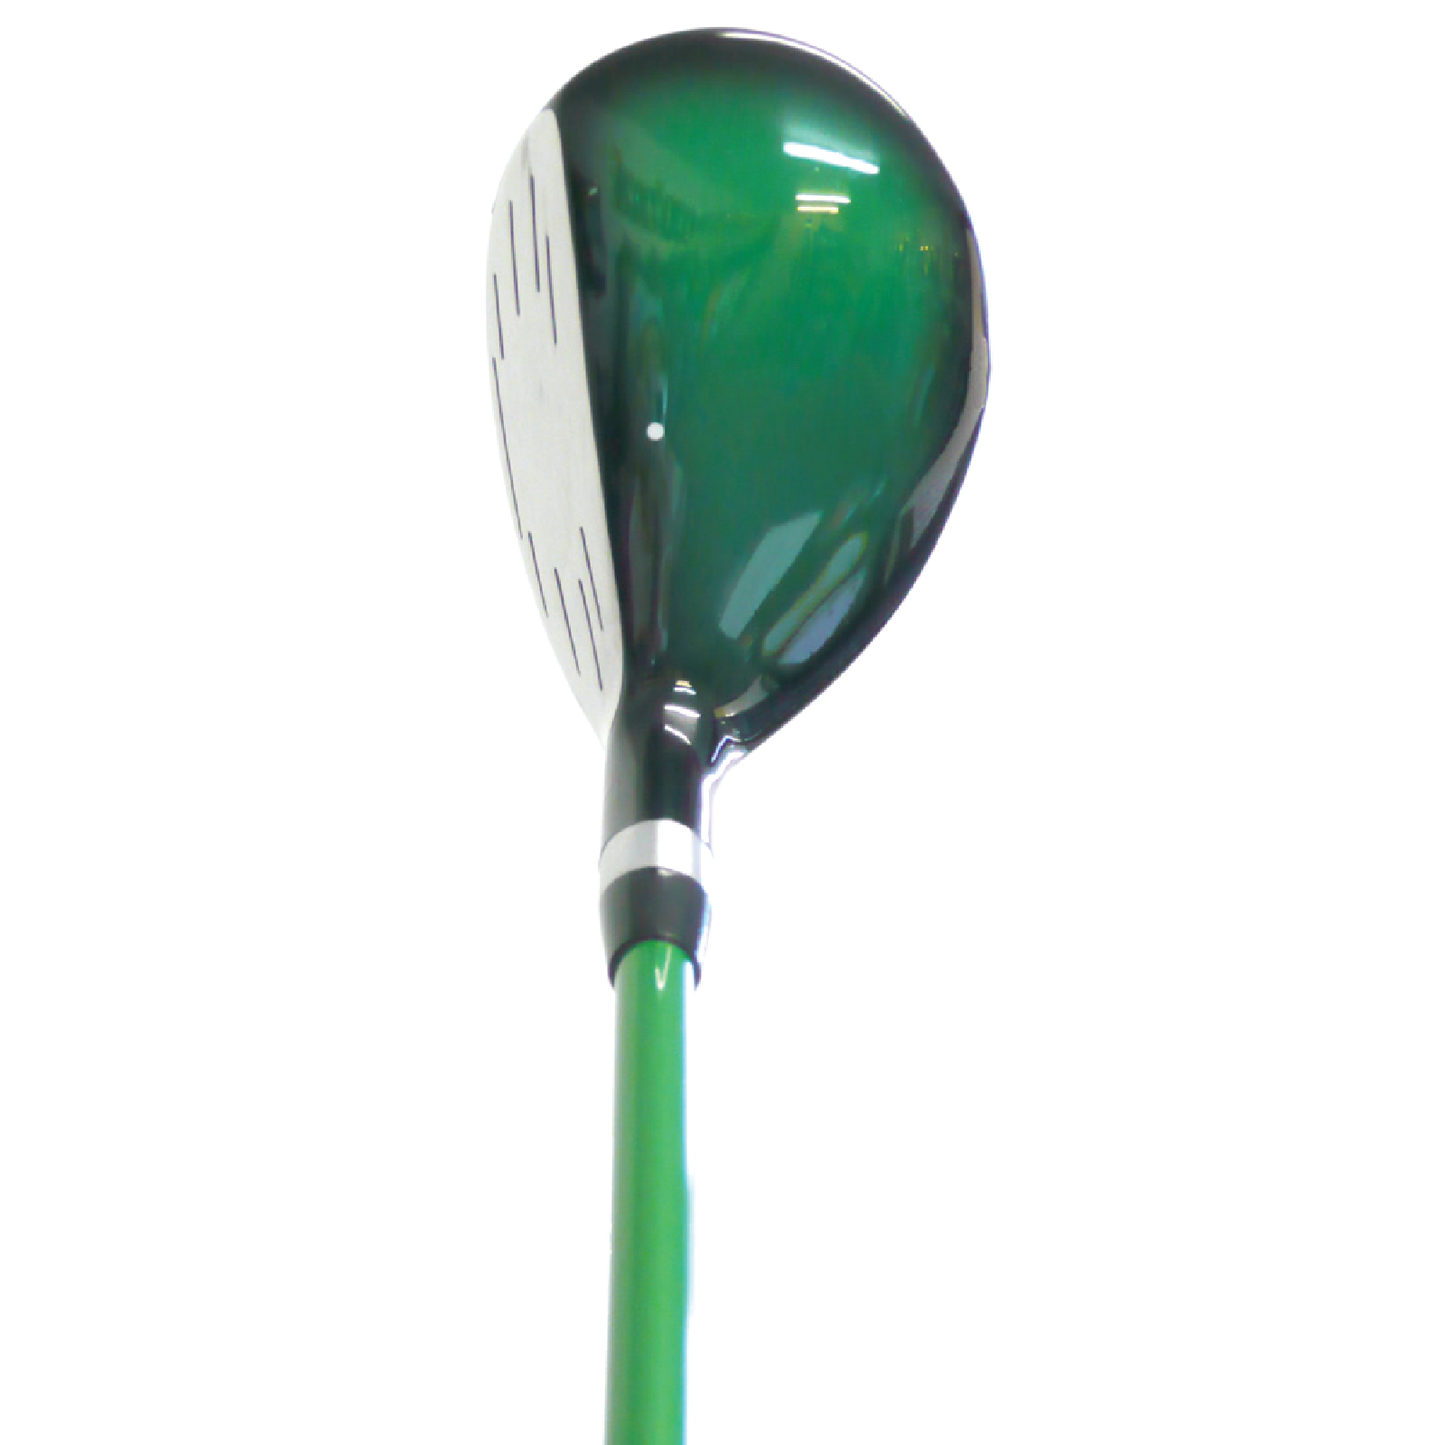 ROOKIE - Kids Golf Hybrid RH - Green 7 to 10 years